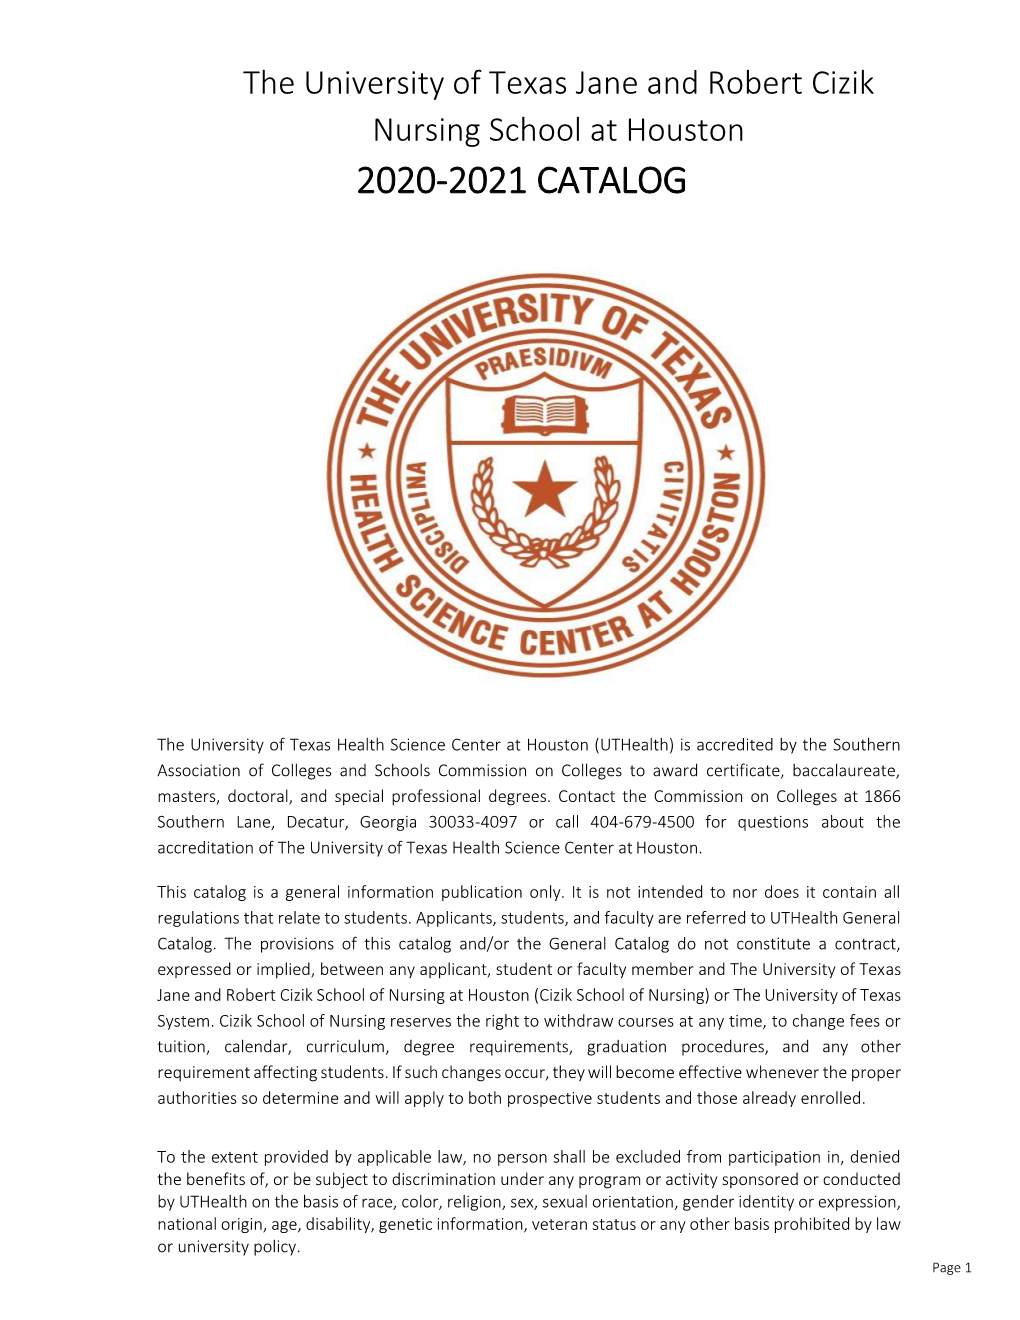 2020-2021 Cizik School of Nursing